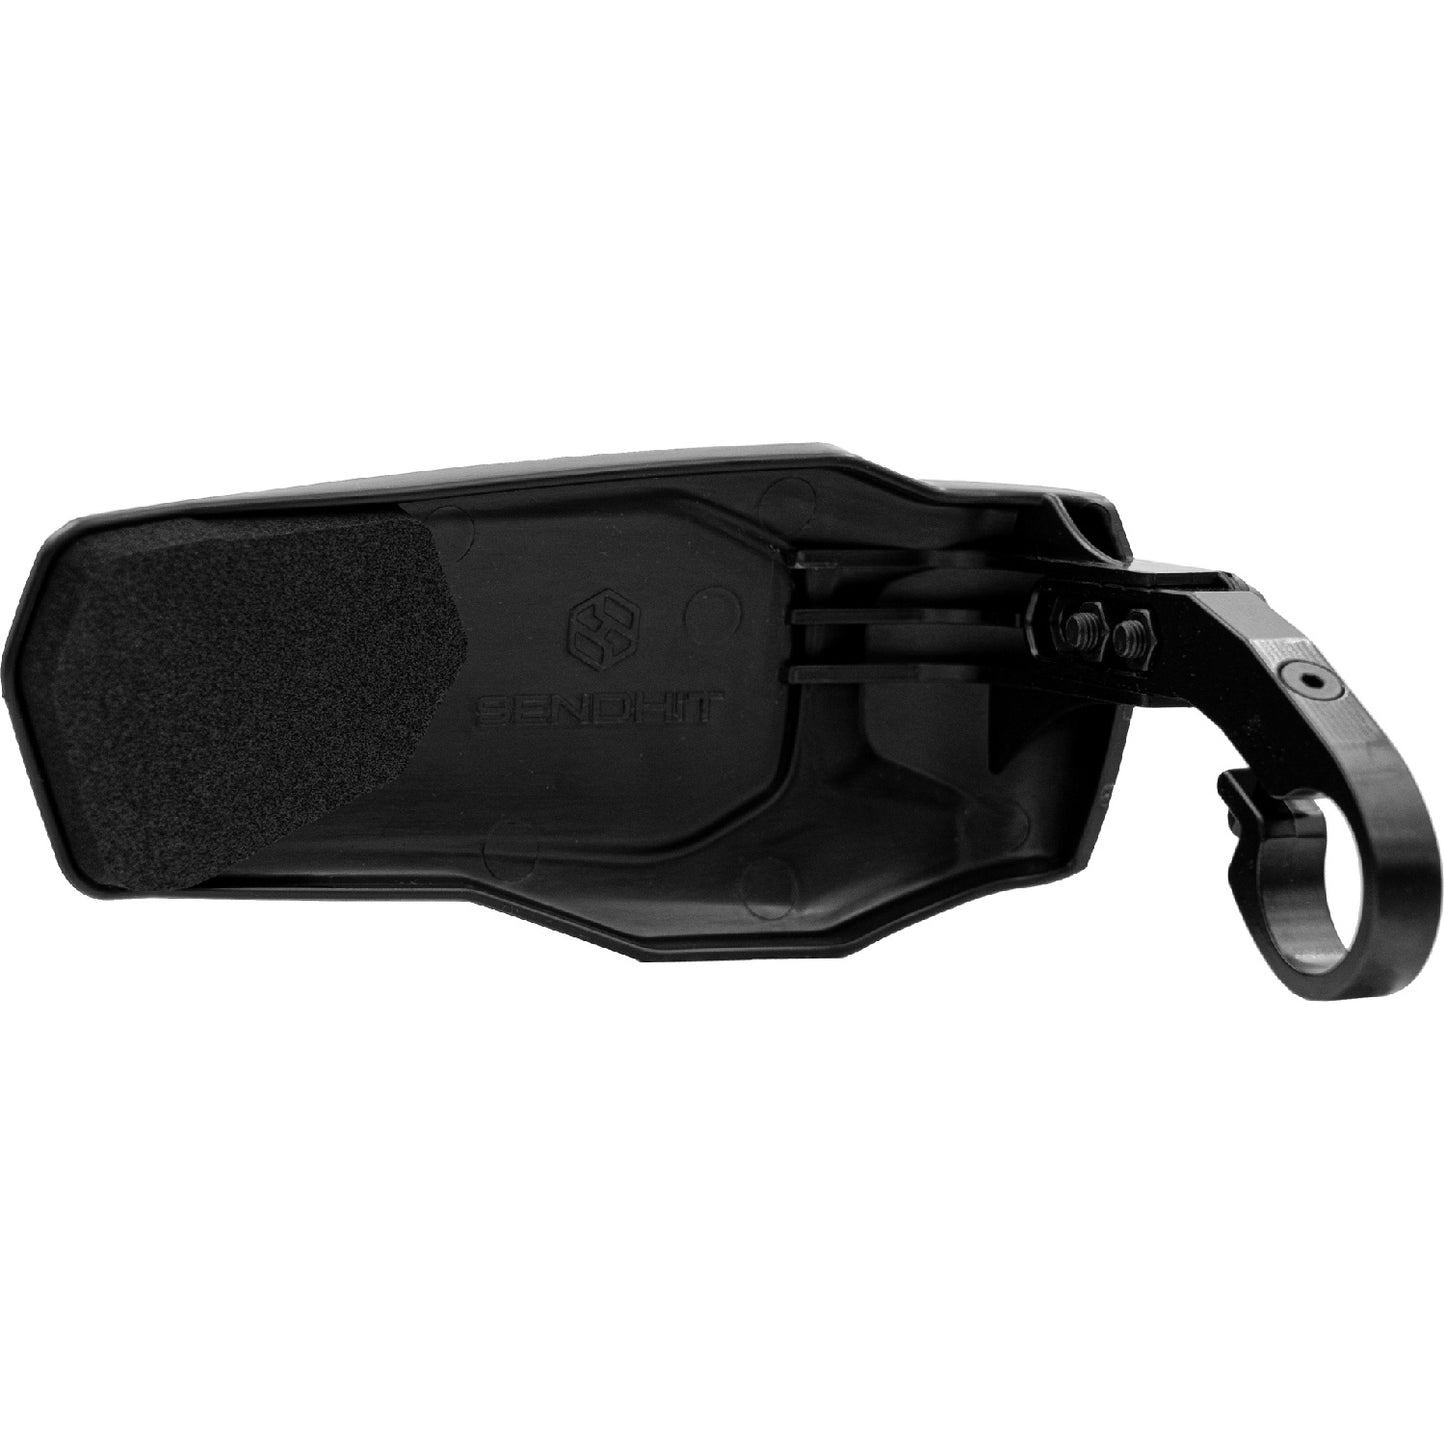 Sendhit Nock MTB Handguards - Black